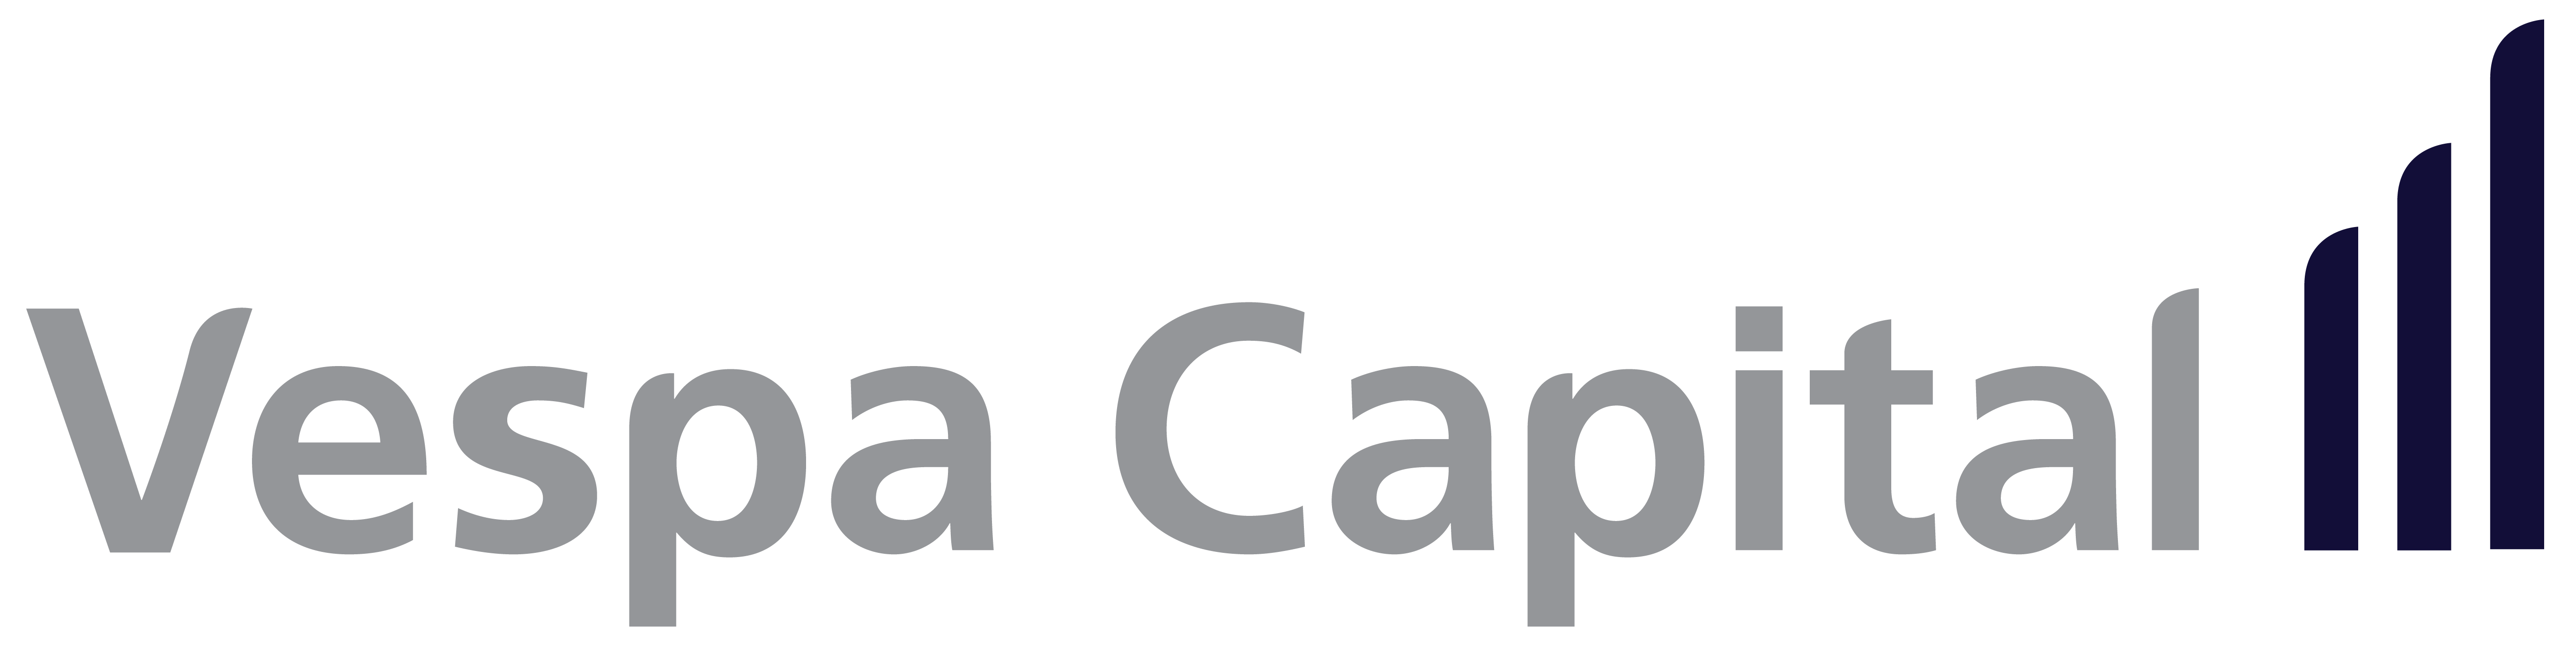 Vespa Capital logo